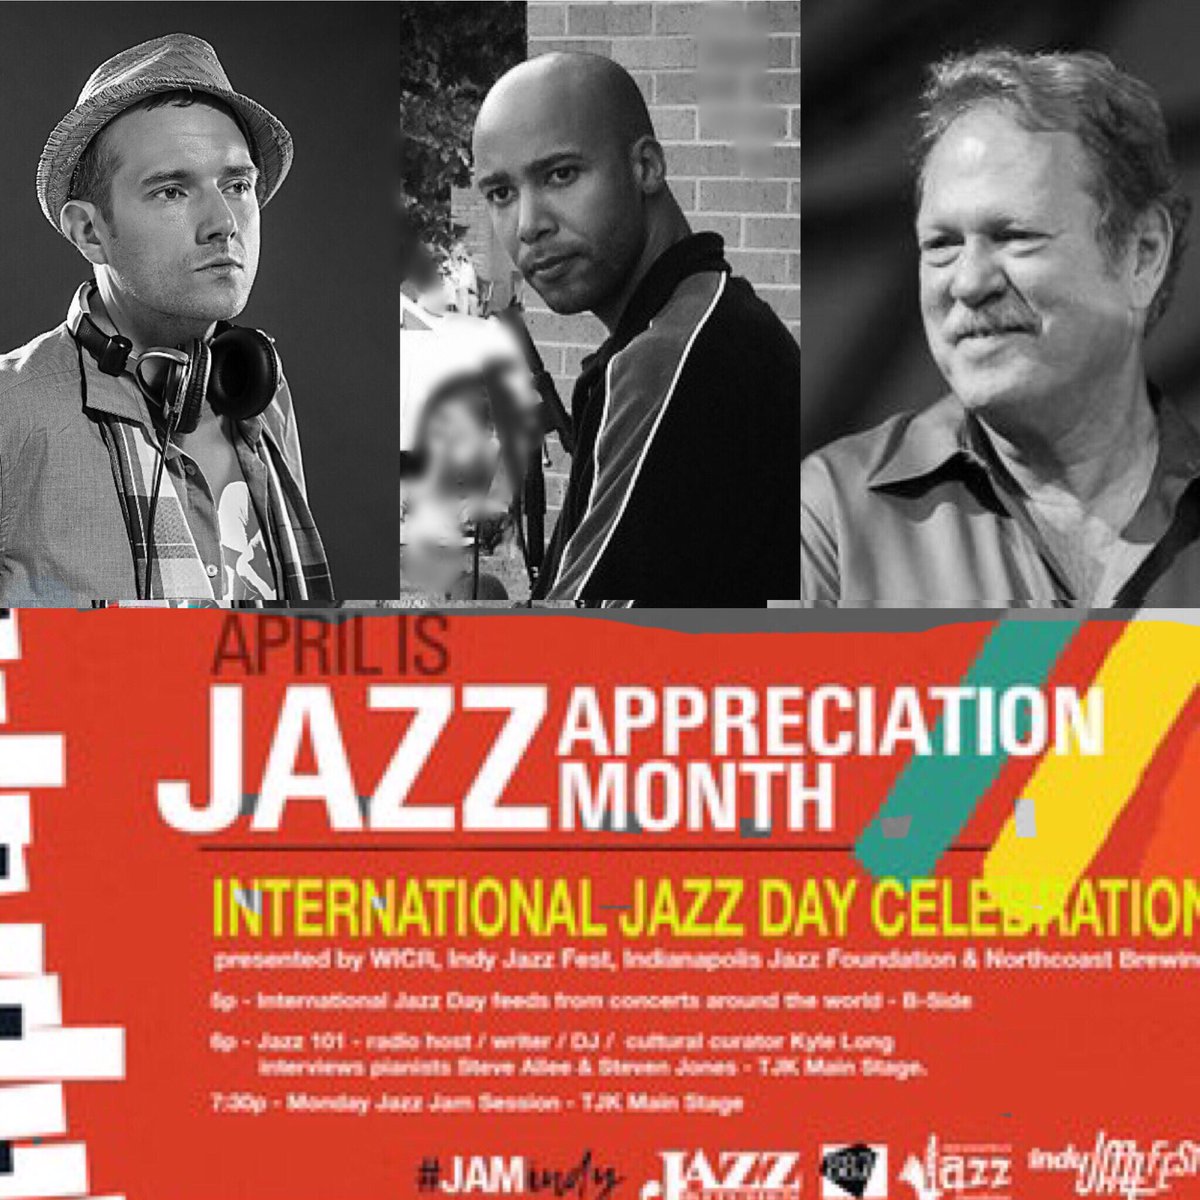 TODAY: @indyjazzfest sponsors #Jazz101 @TheJazzKitchen!
@DJKyleLong
#SteveAllee
#StevenJones
#DavidWilliams 📚 
4/30
thejazzkitchen.com